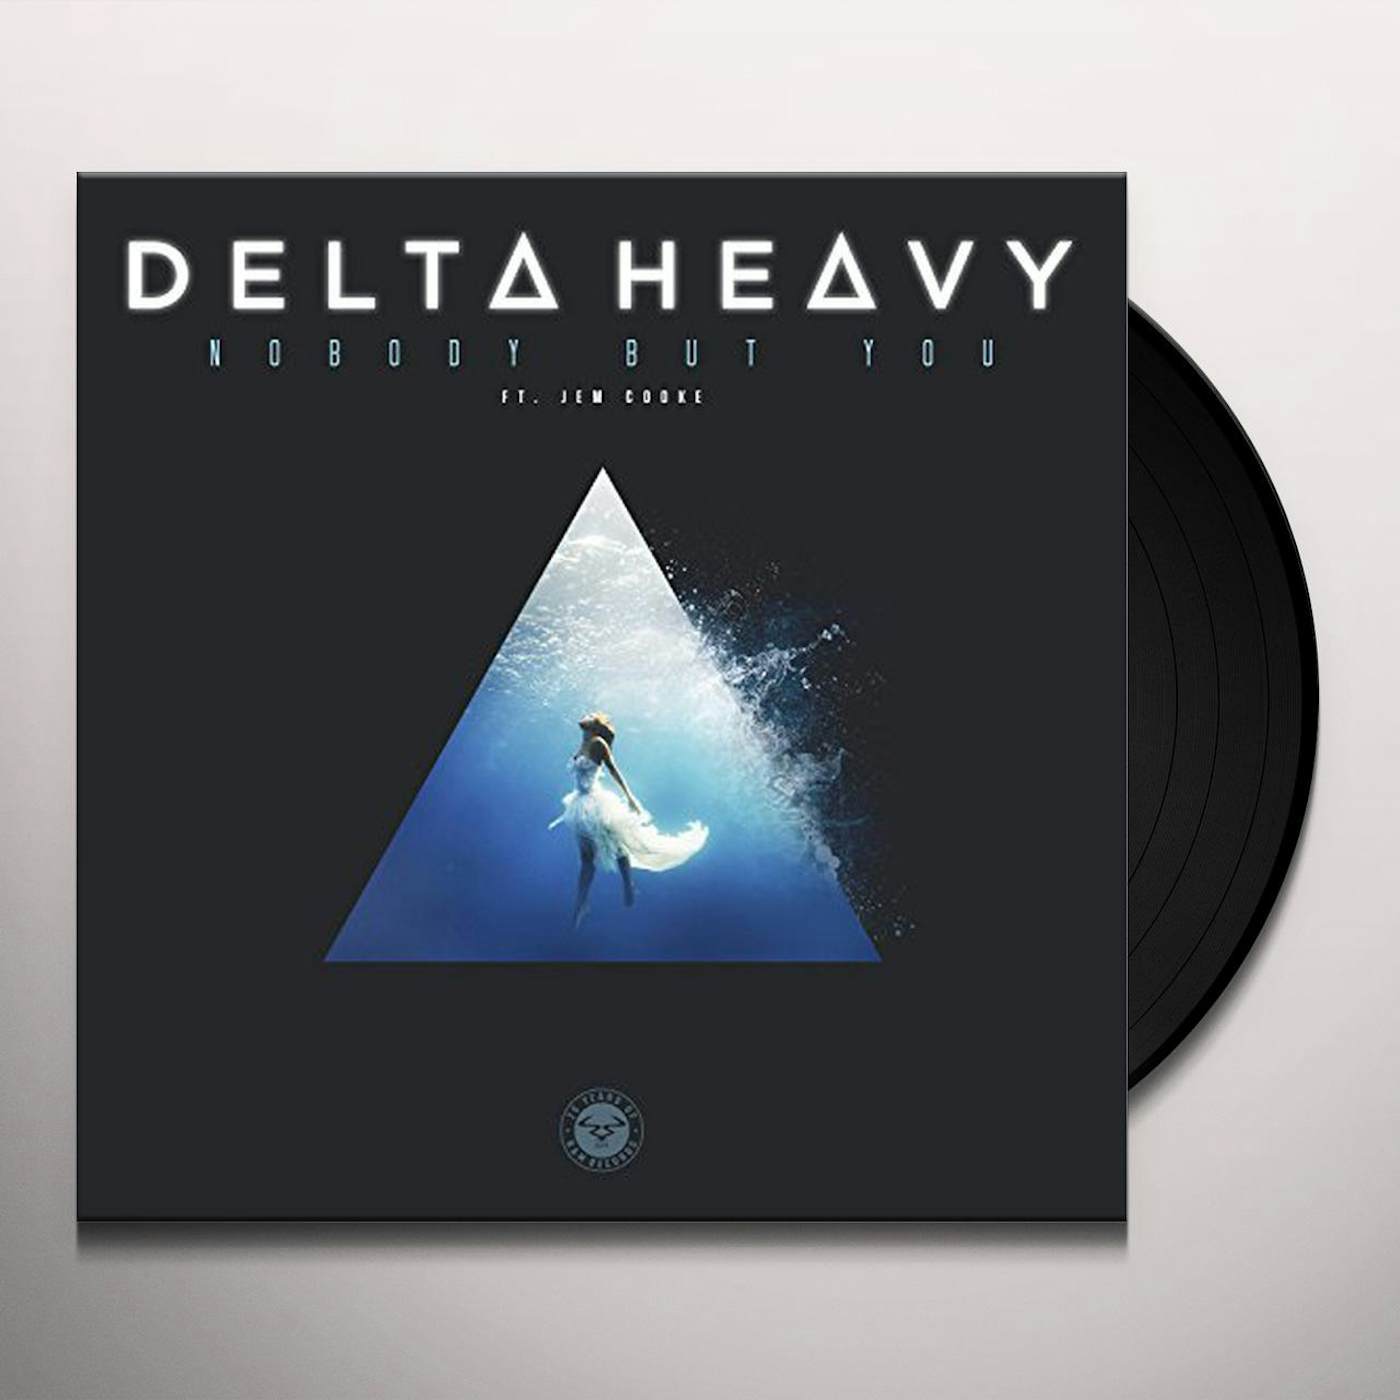 Delta Heavy NOBODY BUT YOU (FT. JEM COOKE) Vinyl Record